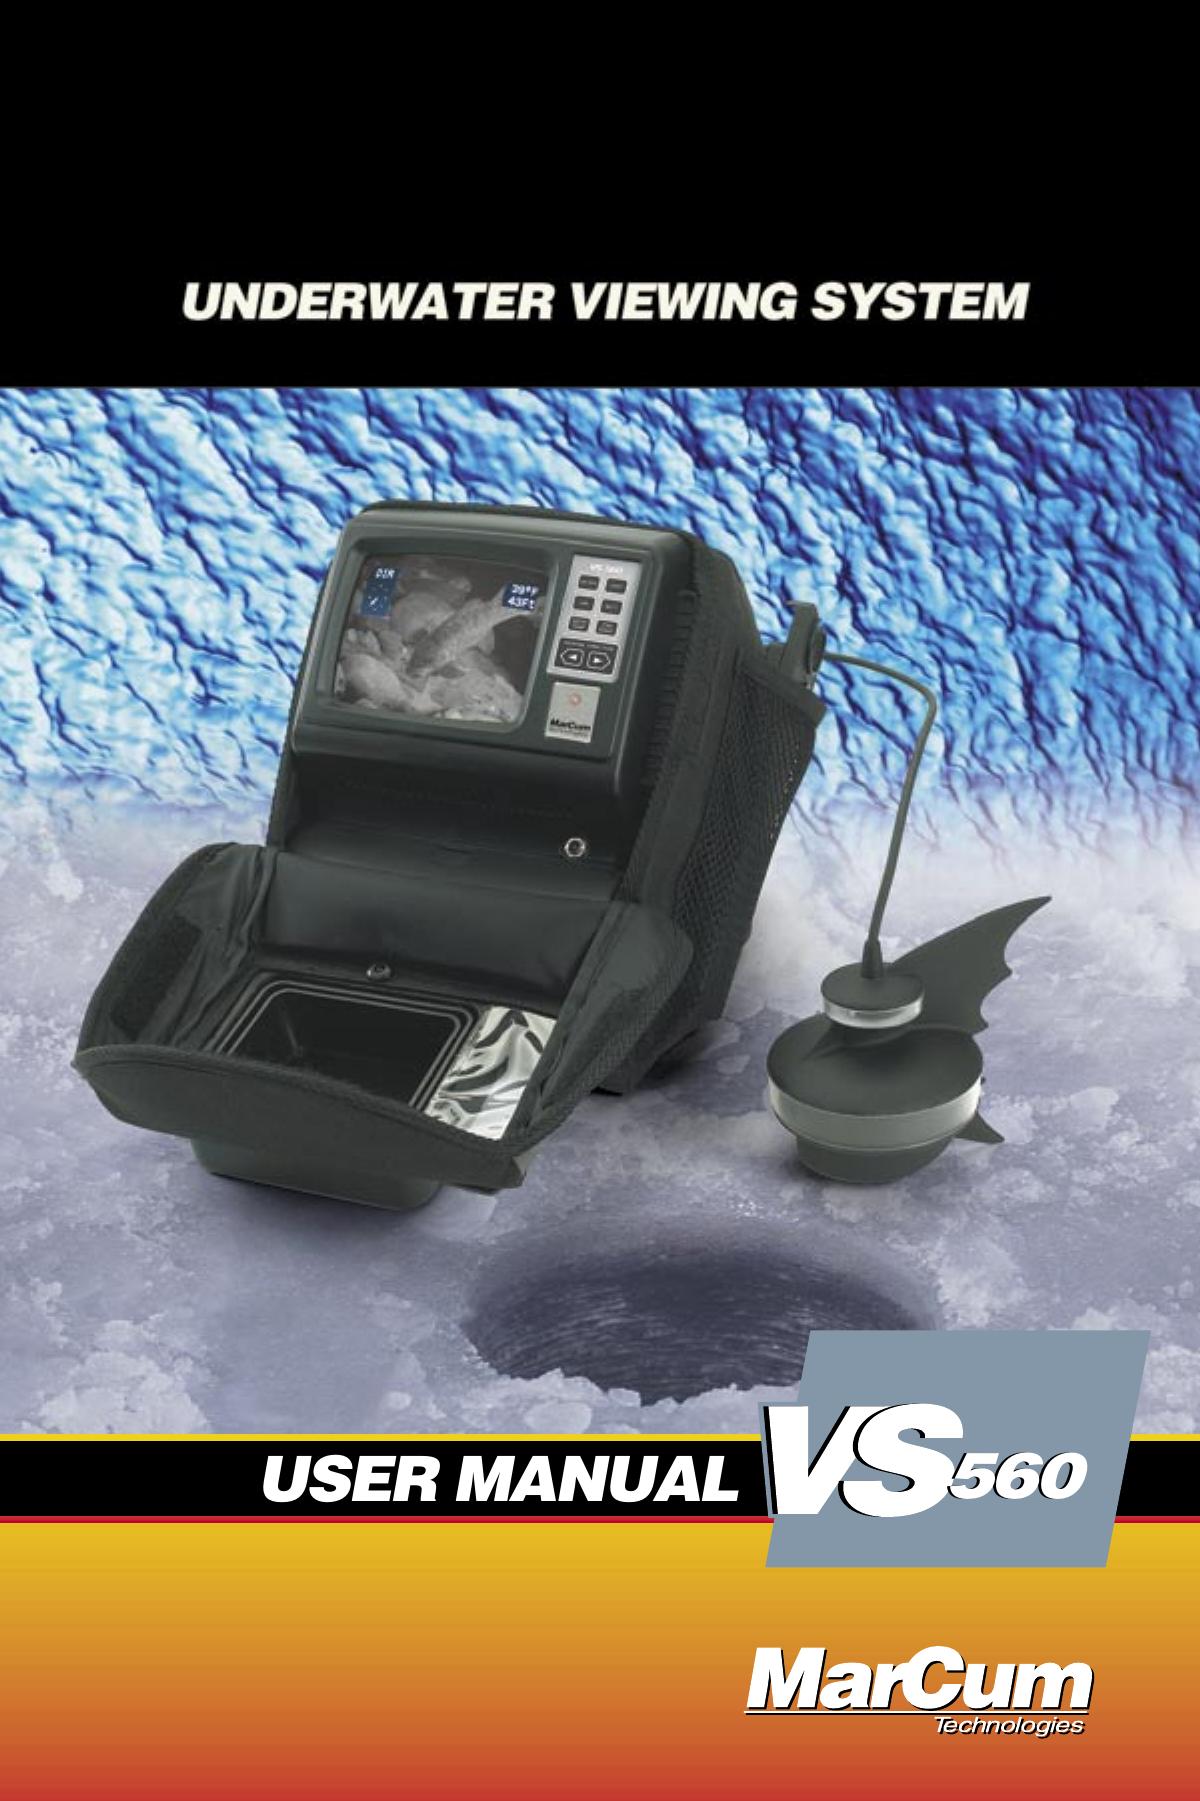 Marcum Technologies VS560 Film Camera User Manual